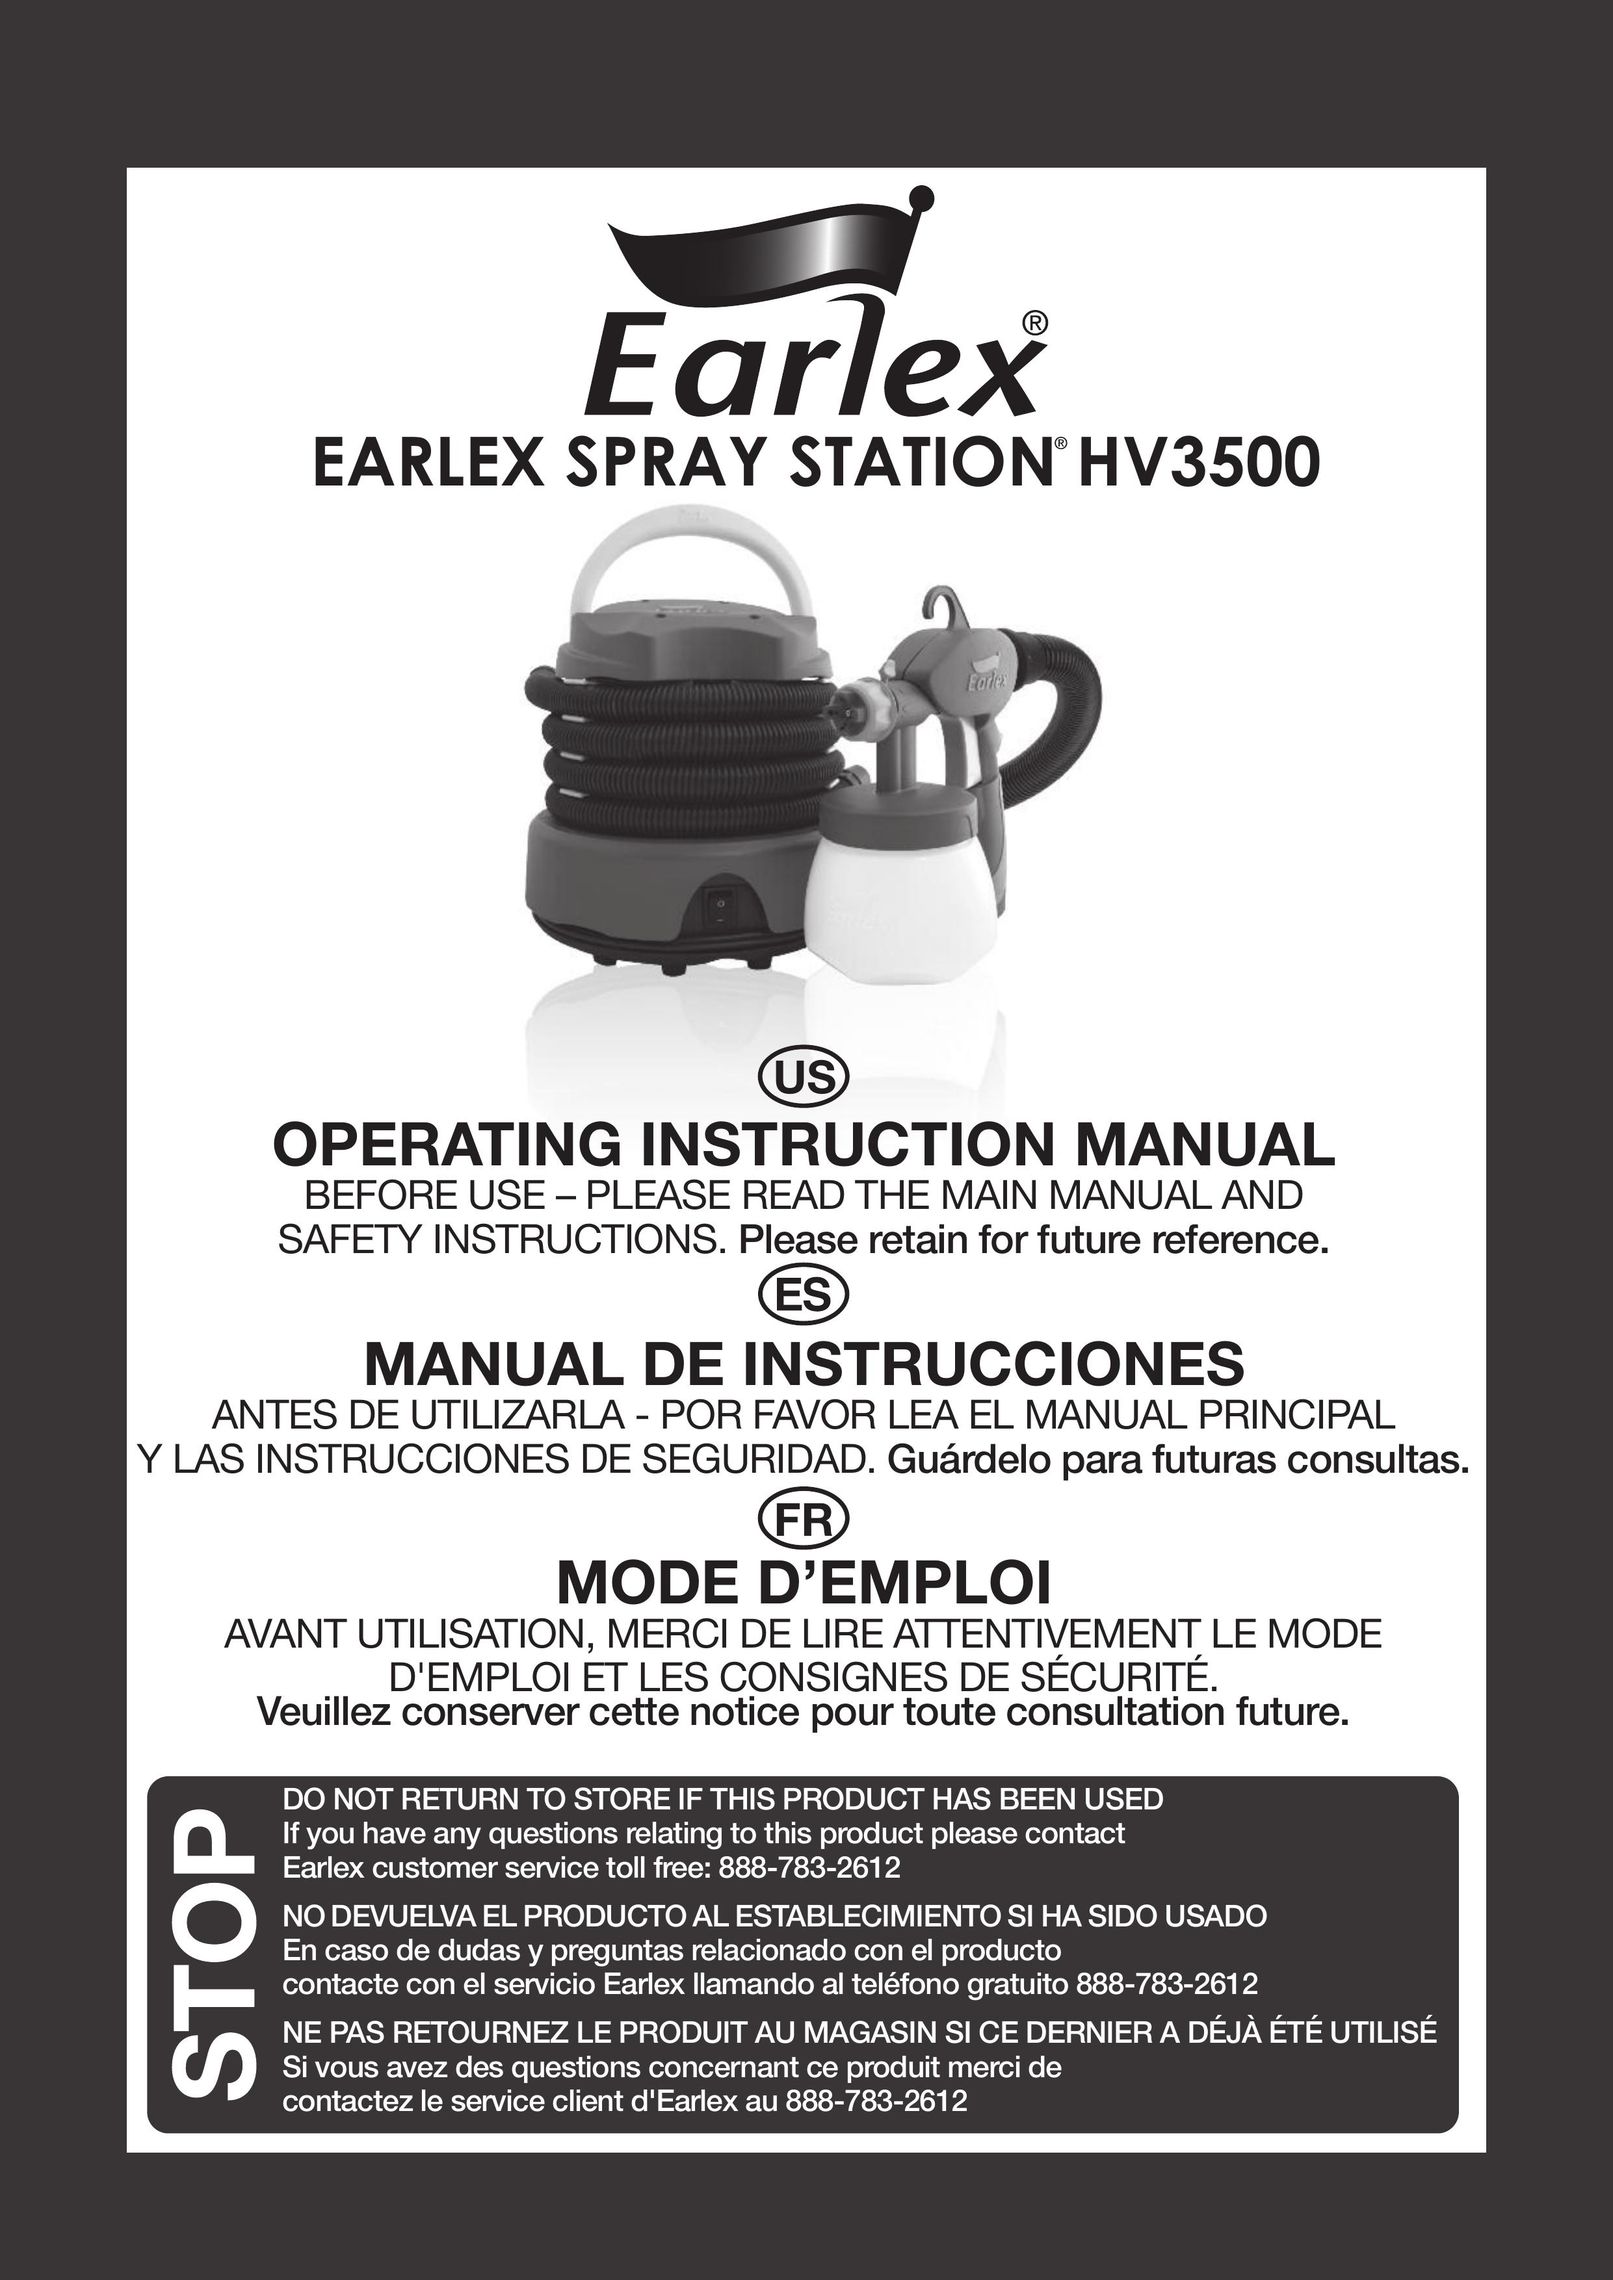 Earlex HV3500 Paint Sprayer User Manual